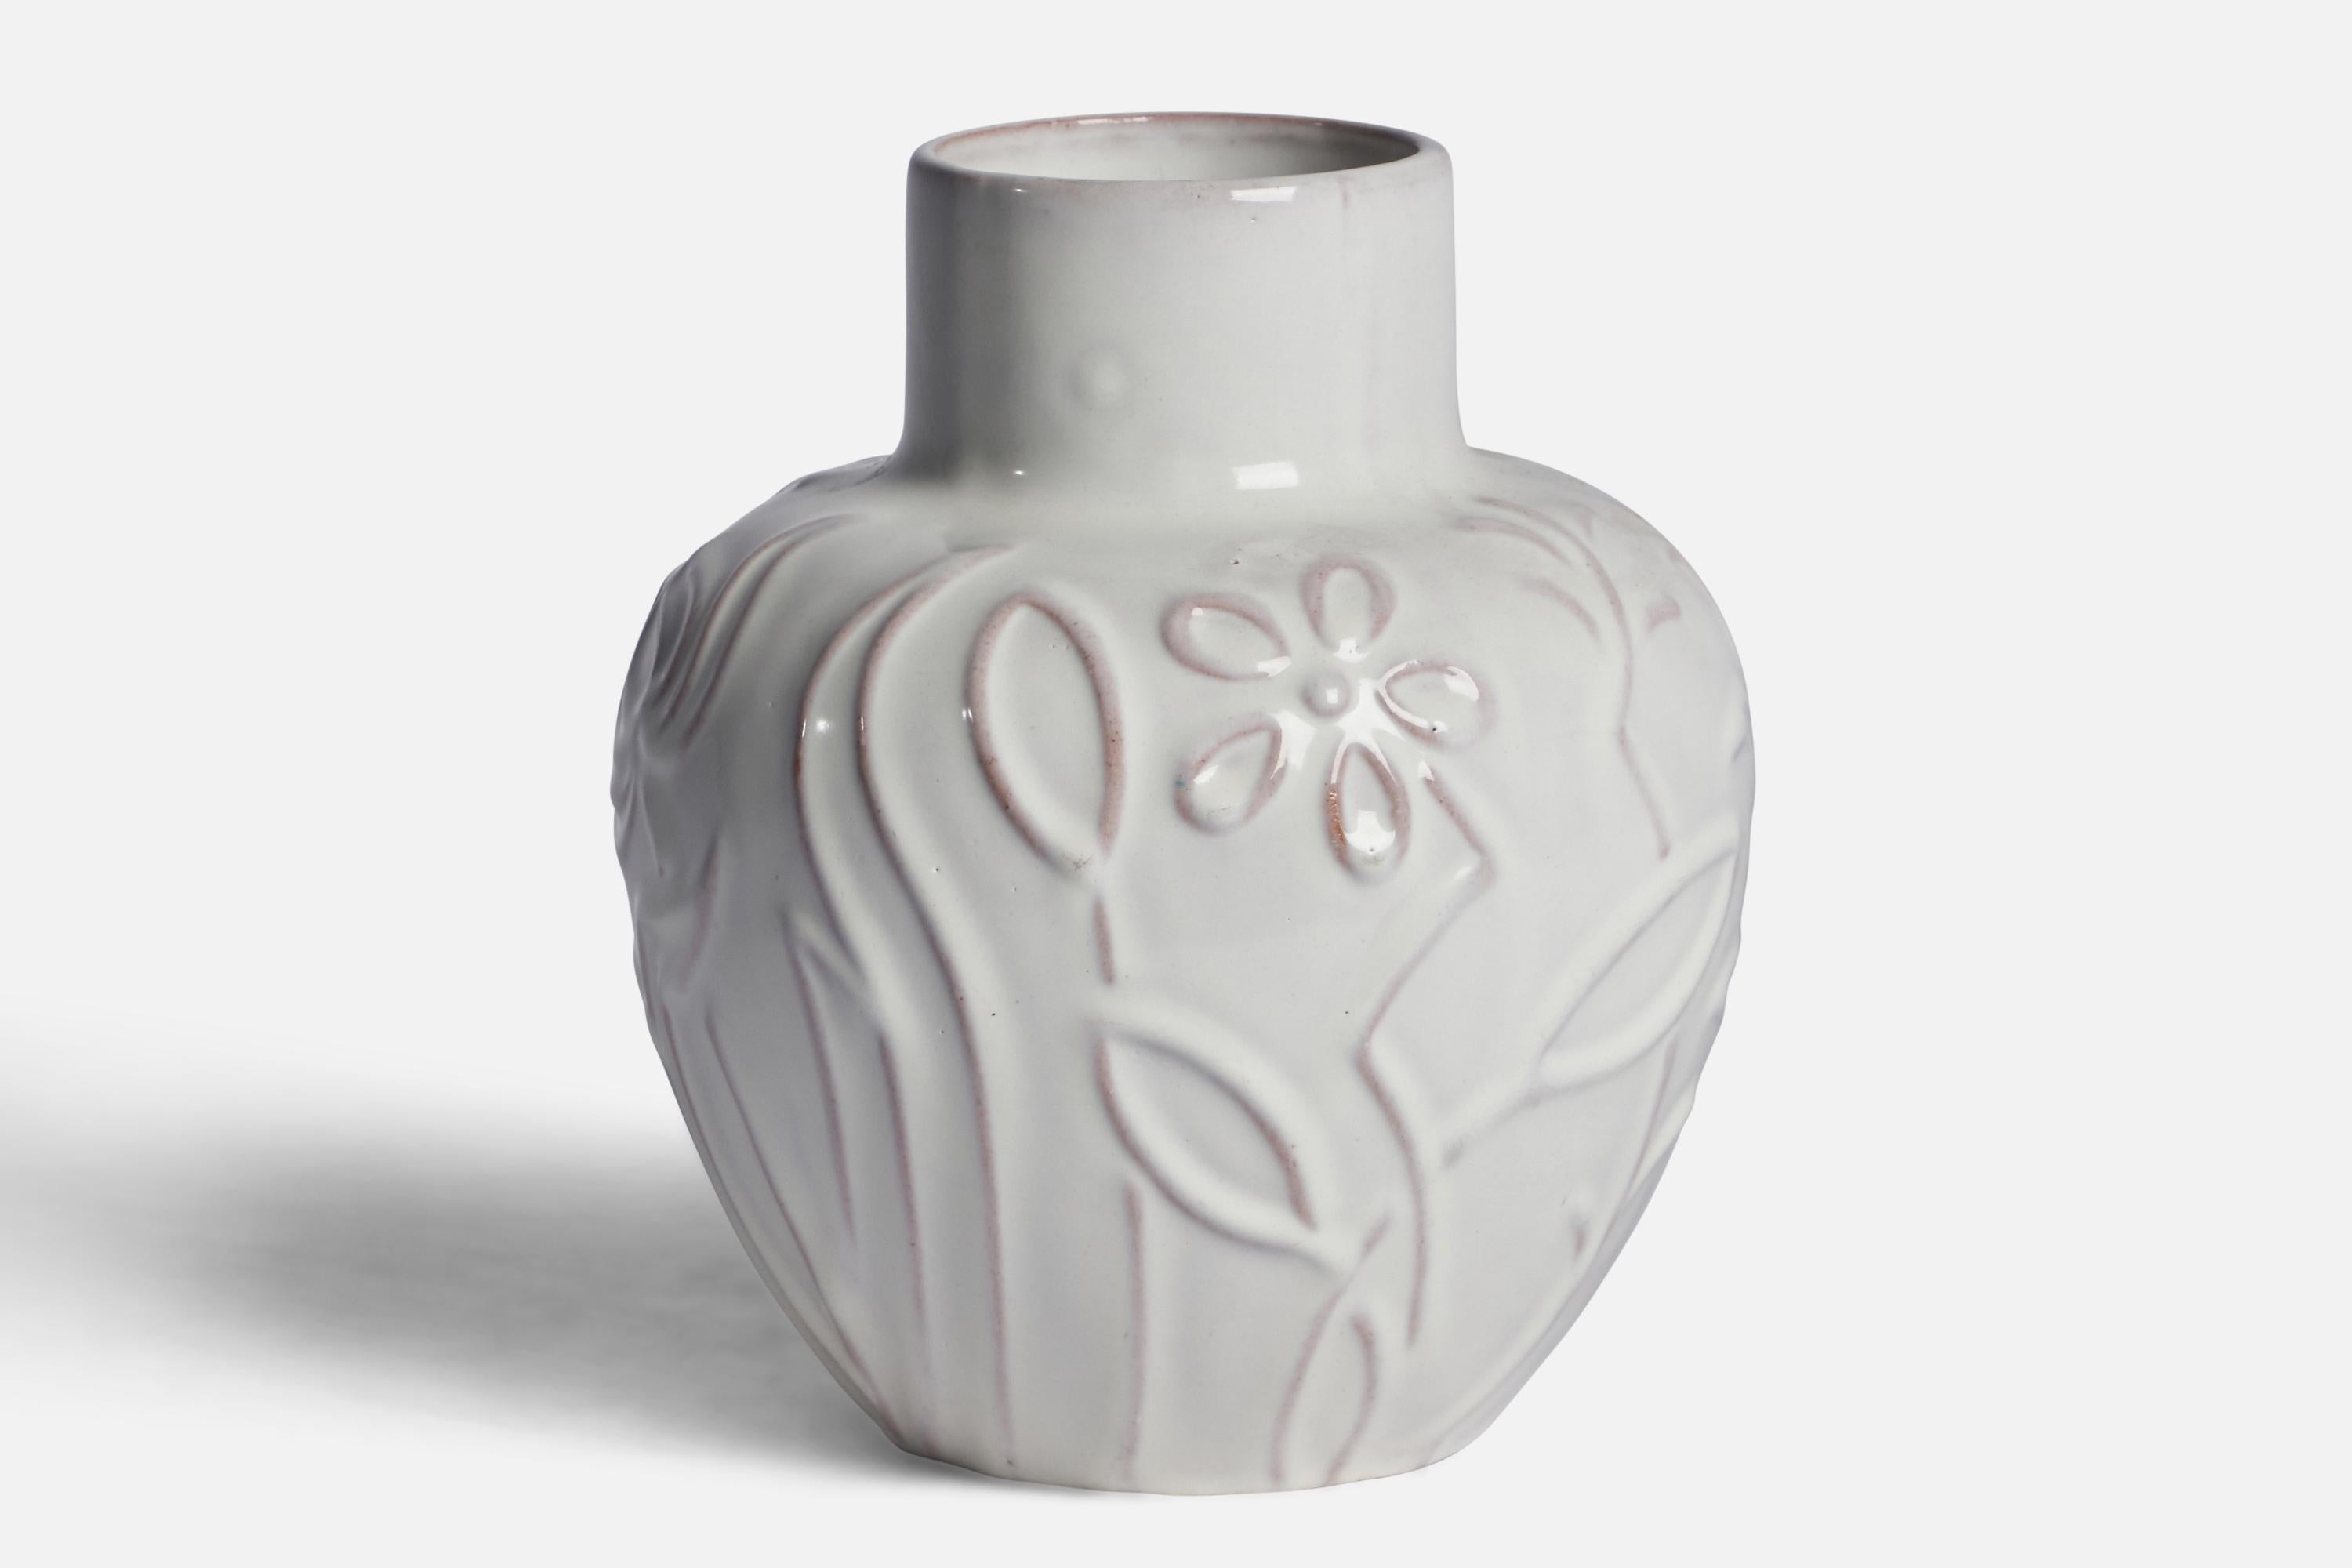 A white-glazed earthenware vase designed and produced by Upsala Ekeby, Sweden, 1930s.